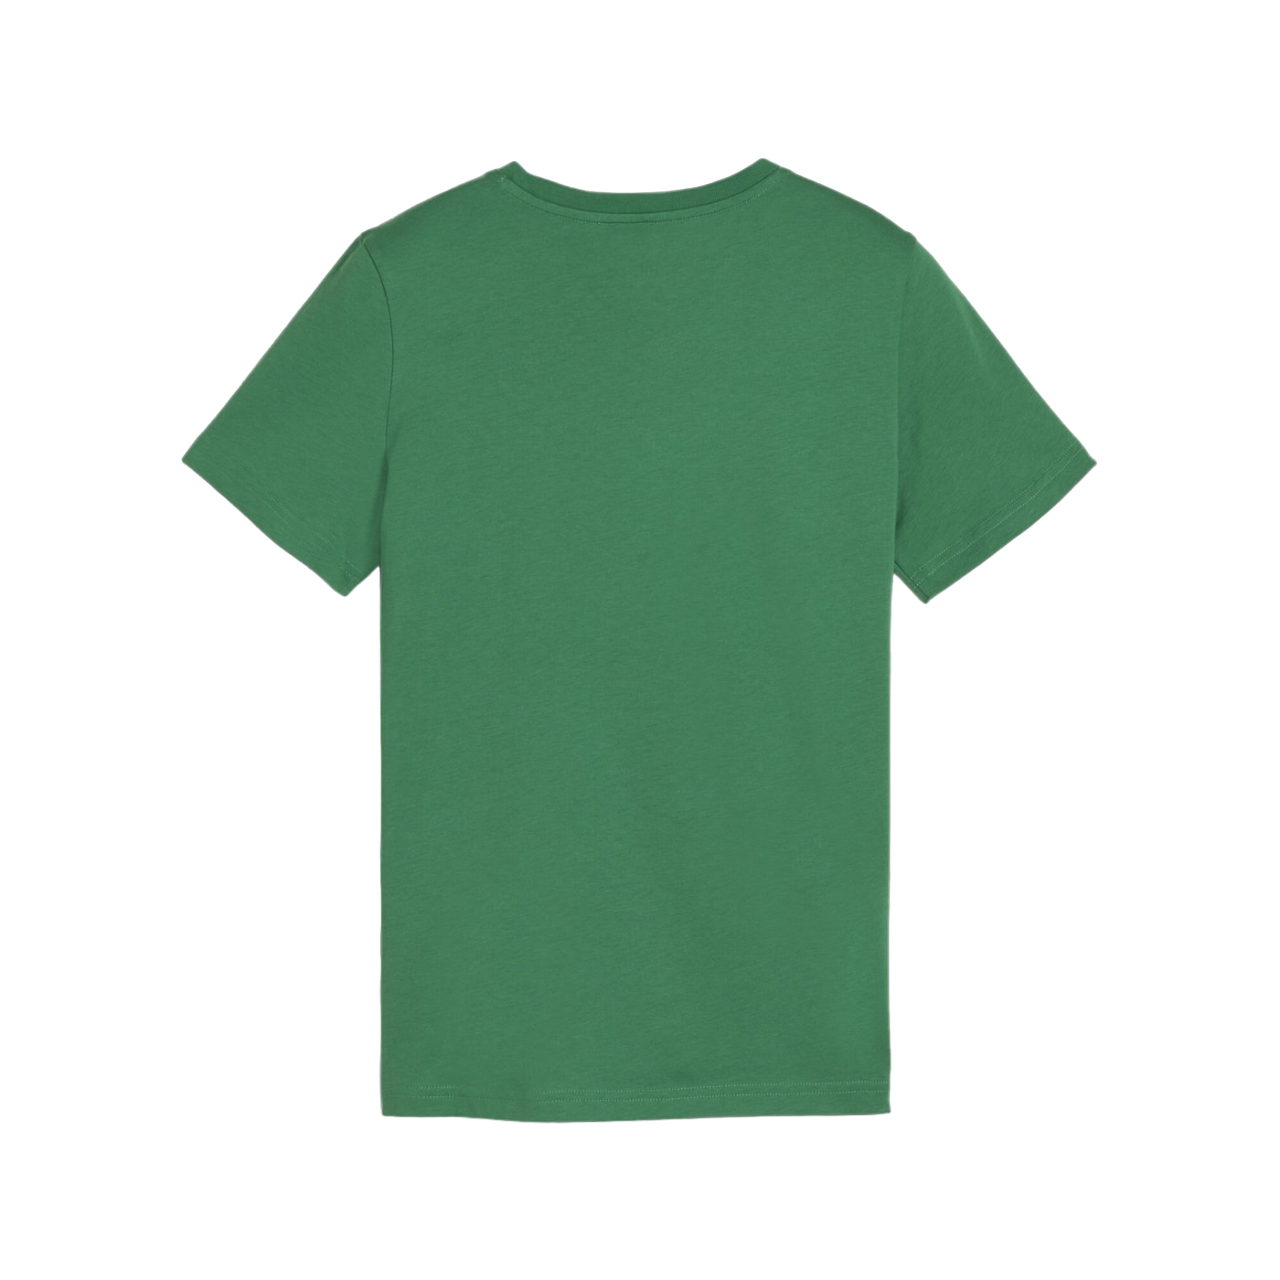 Puma short sleeve t-shirt for children graphics 680299 86 green